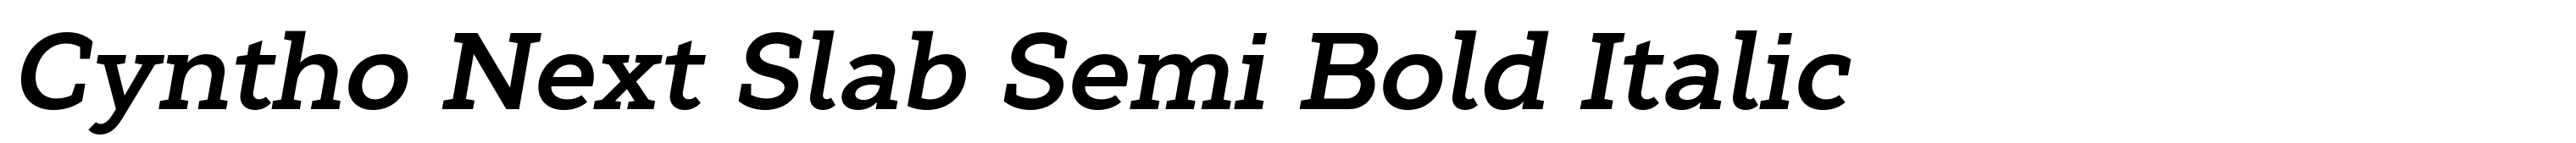 Cyntho Next Slab Semi Bold Italic